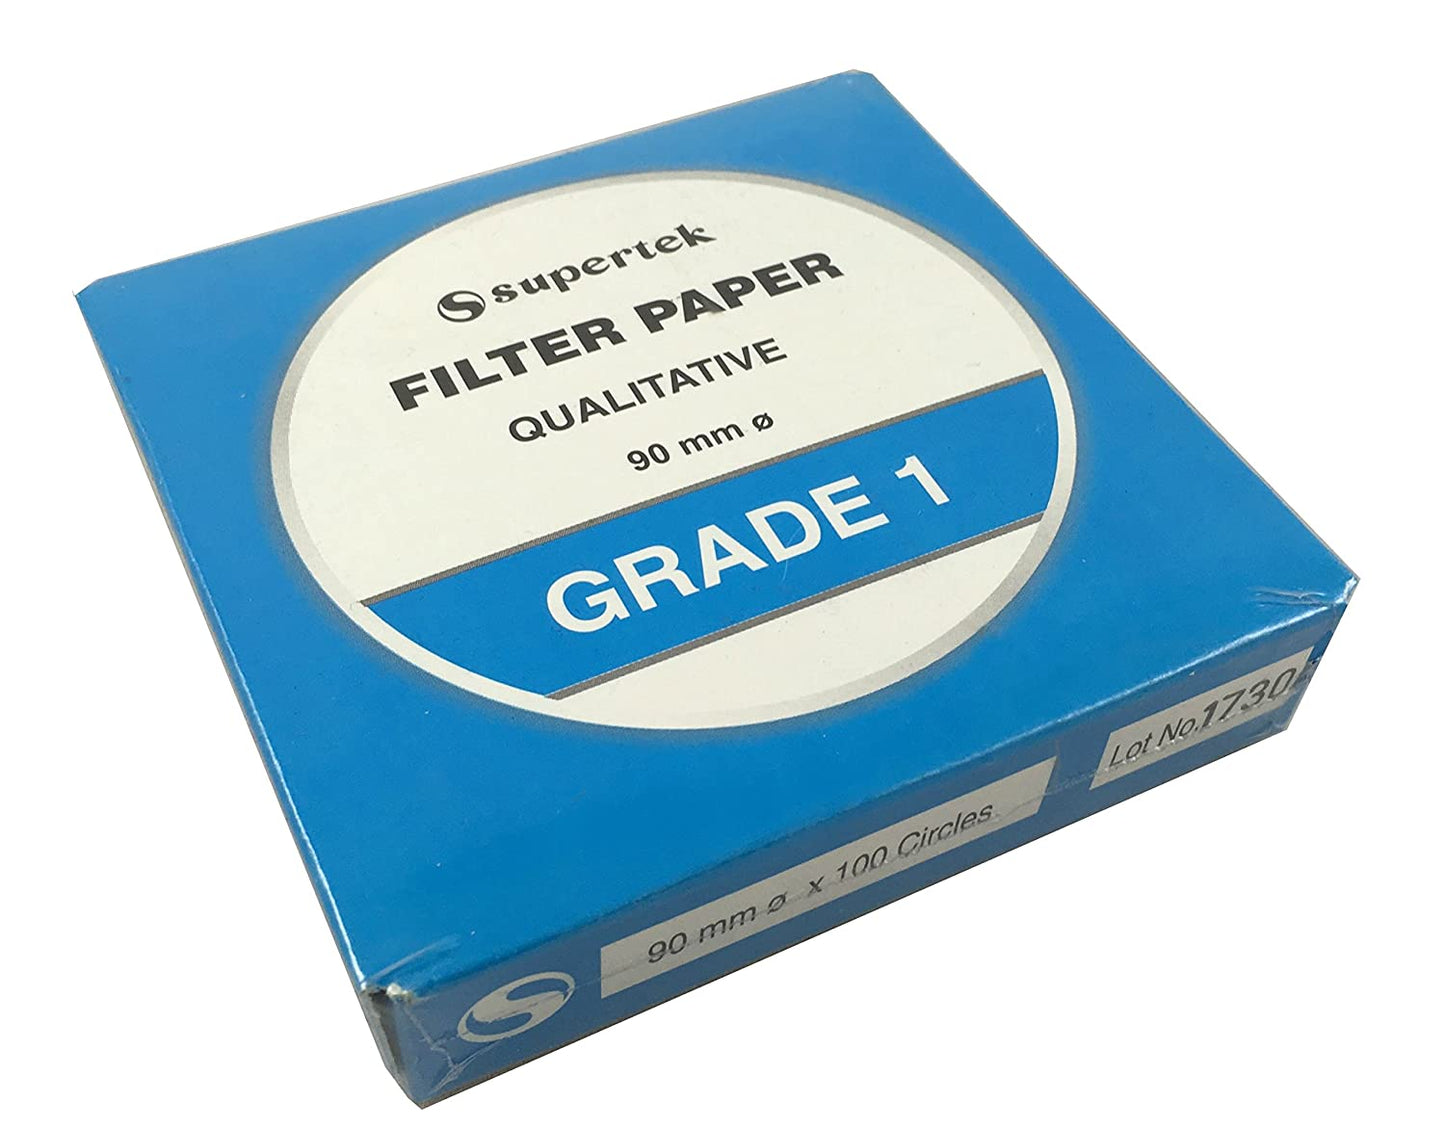 Filter Paper, Qualitative, Grade 1, 90 mm (Diameter) Pack of 100 Sheets